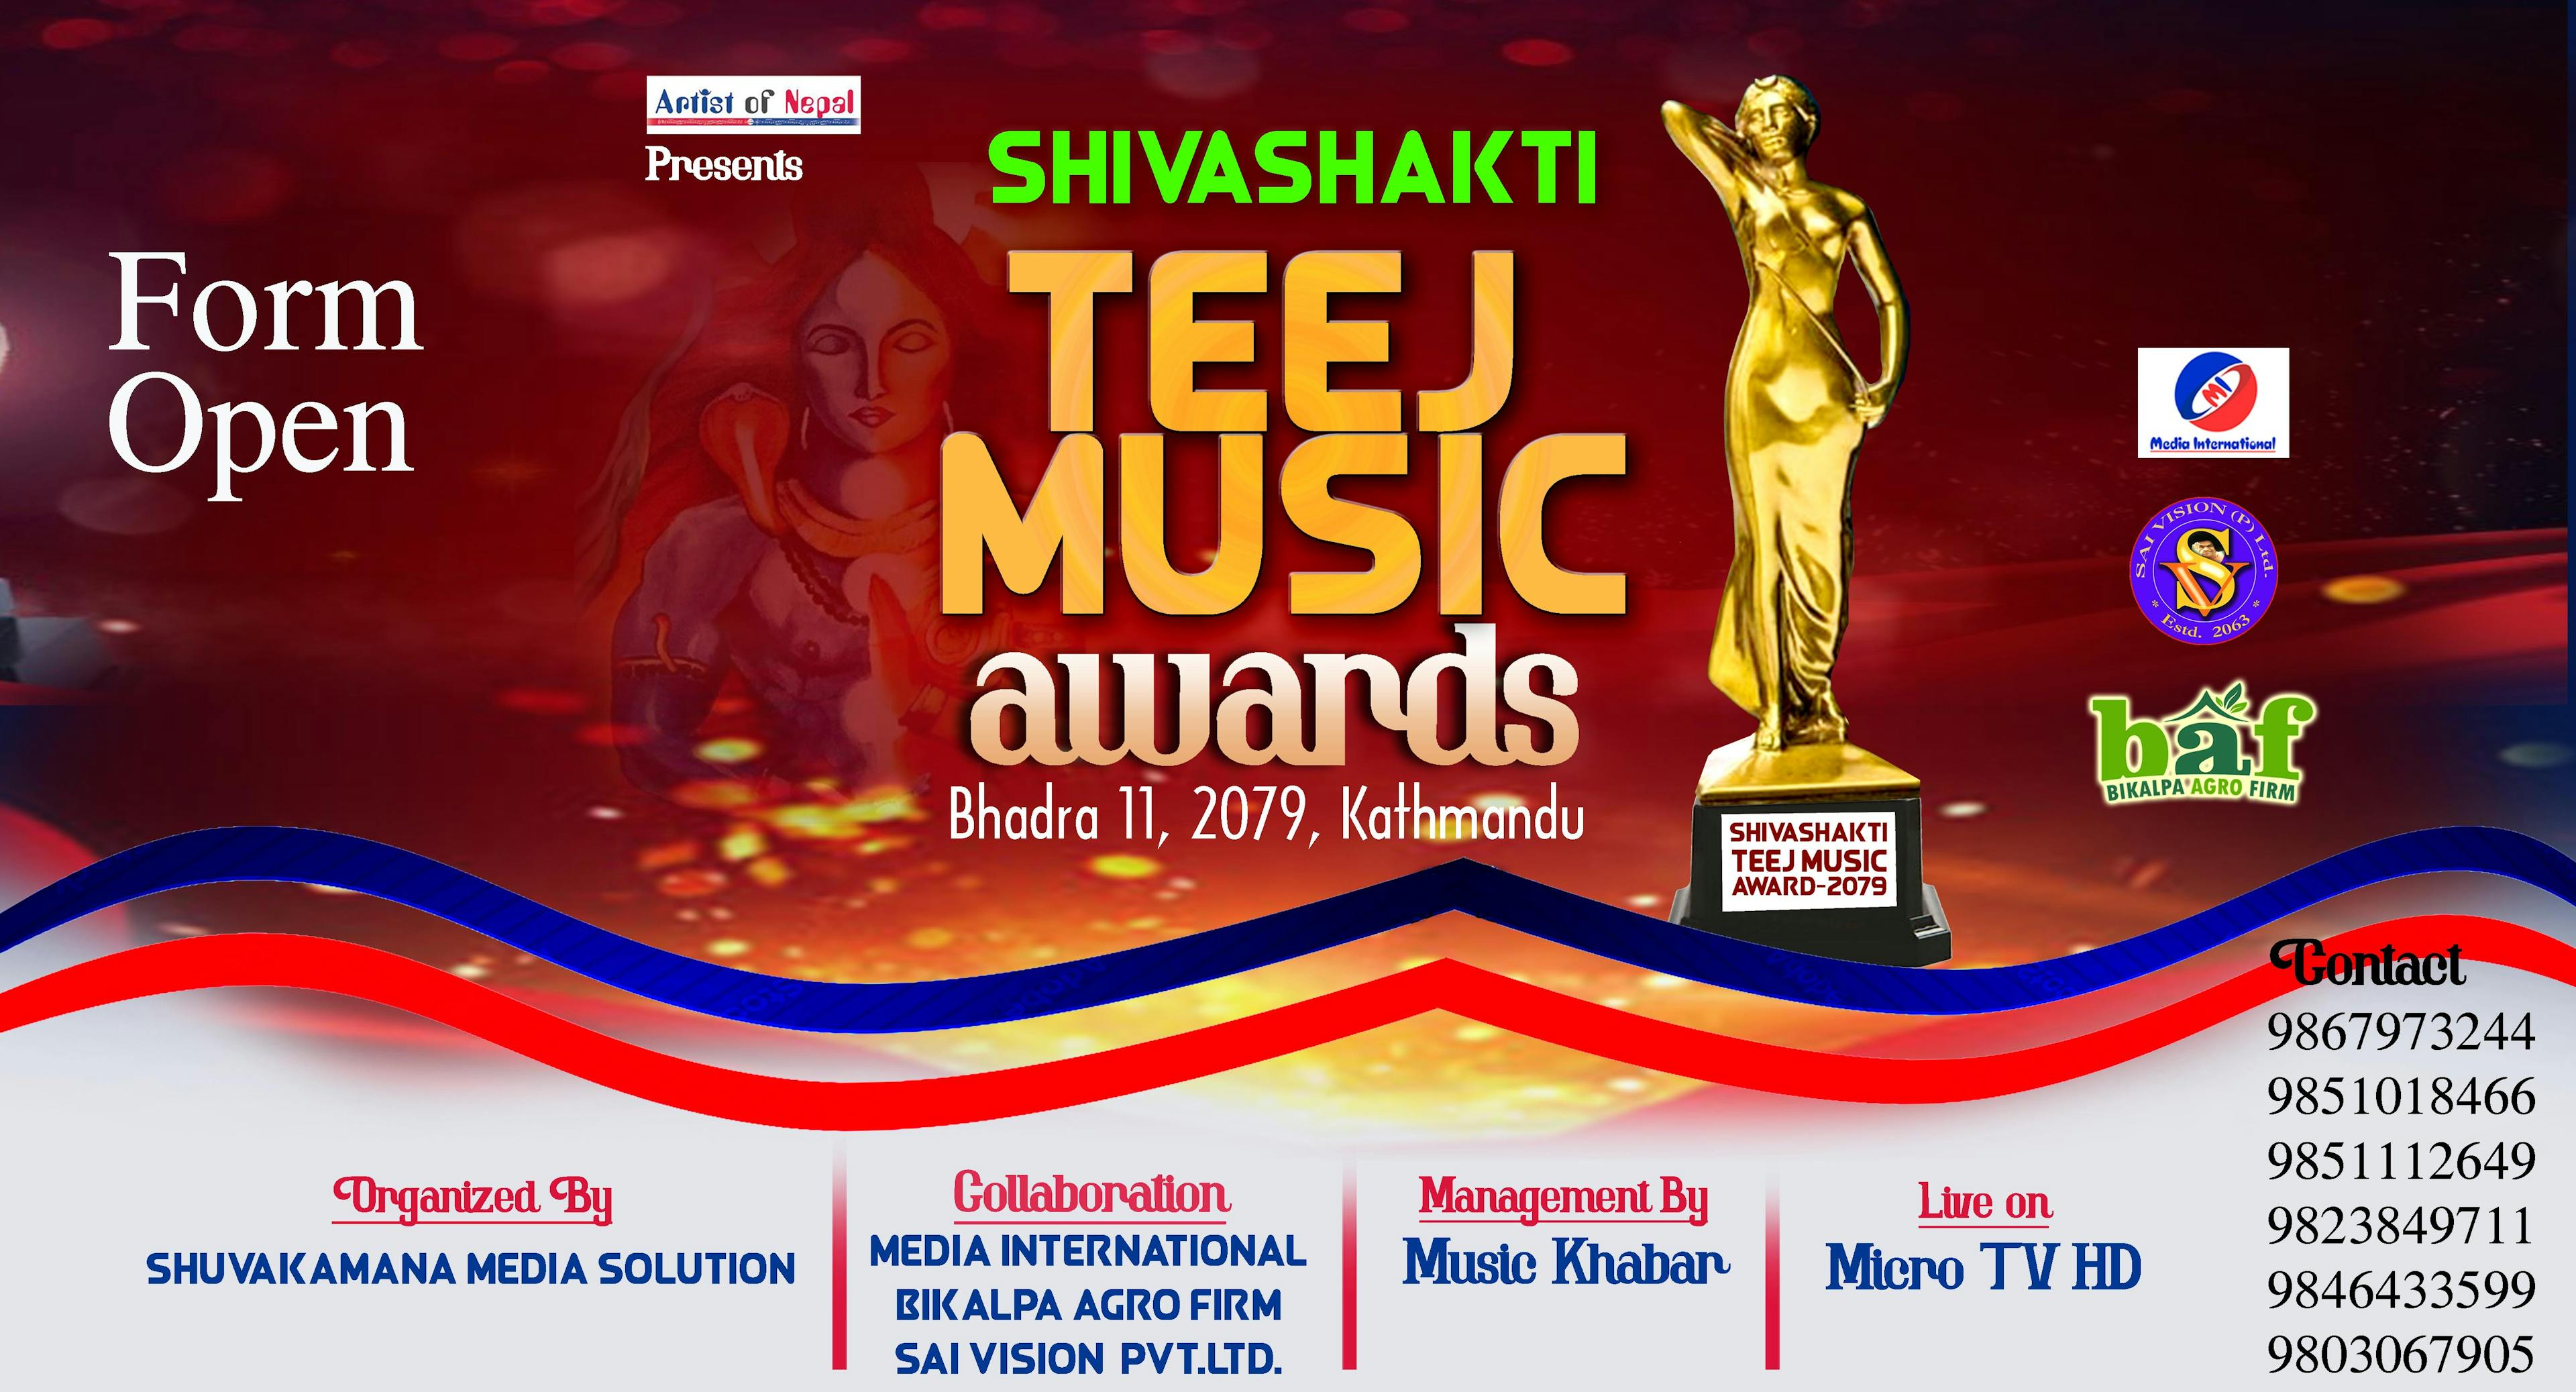 Shivshakti Teej Music Awards will be held on Bhadra 11